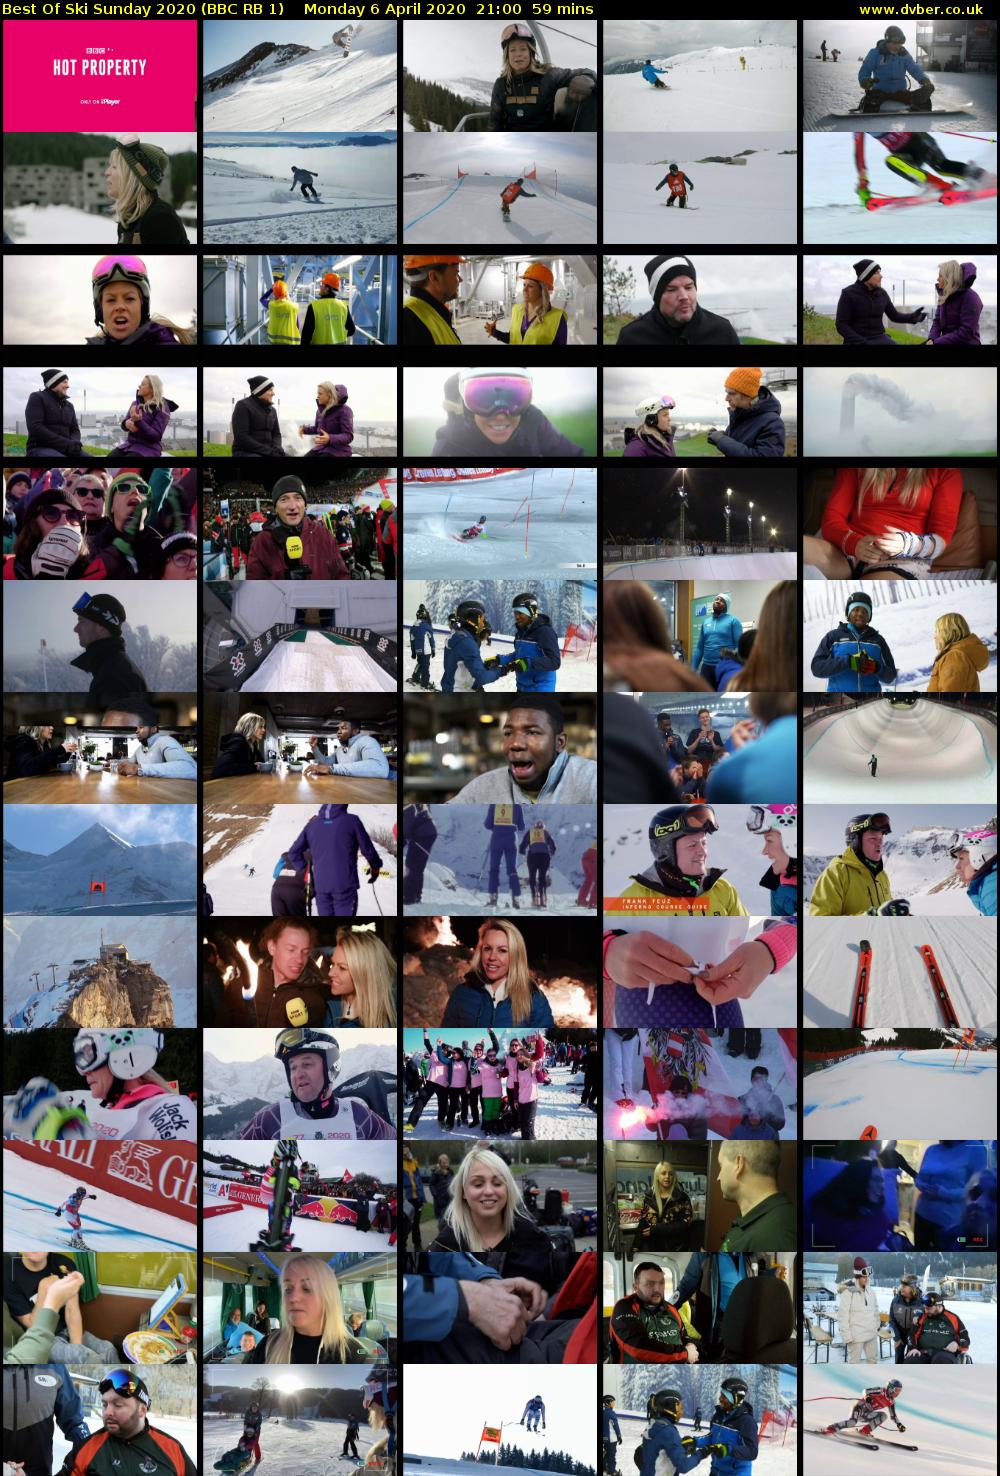 Best Of Ski Sunday 2020 (BBC RB 1) Monday 6 April 2020 21:00 - 21:59